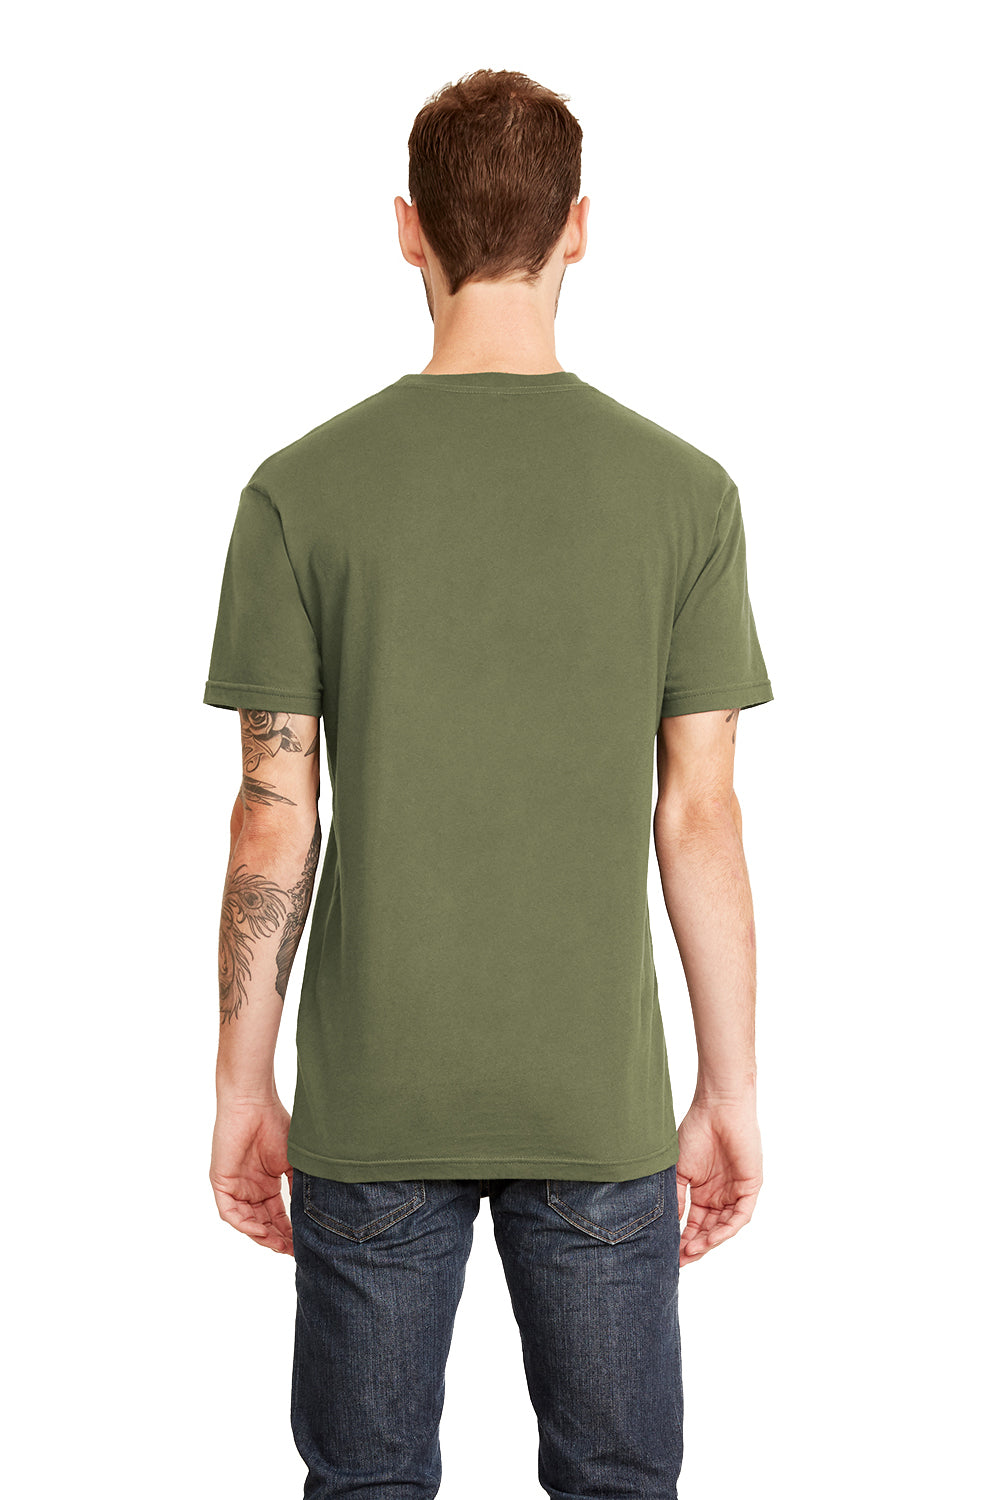 Next Level 3605 Mens Fine Jersey Short Sleeve Crewneck T-Shirt w/ Pocket Military Green Back